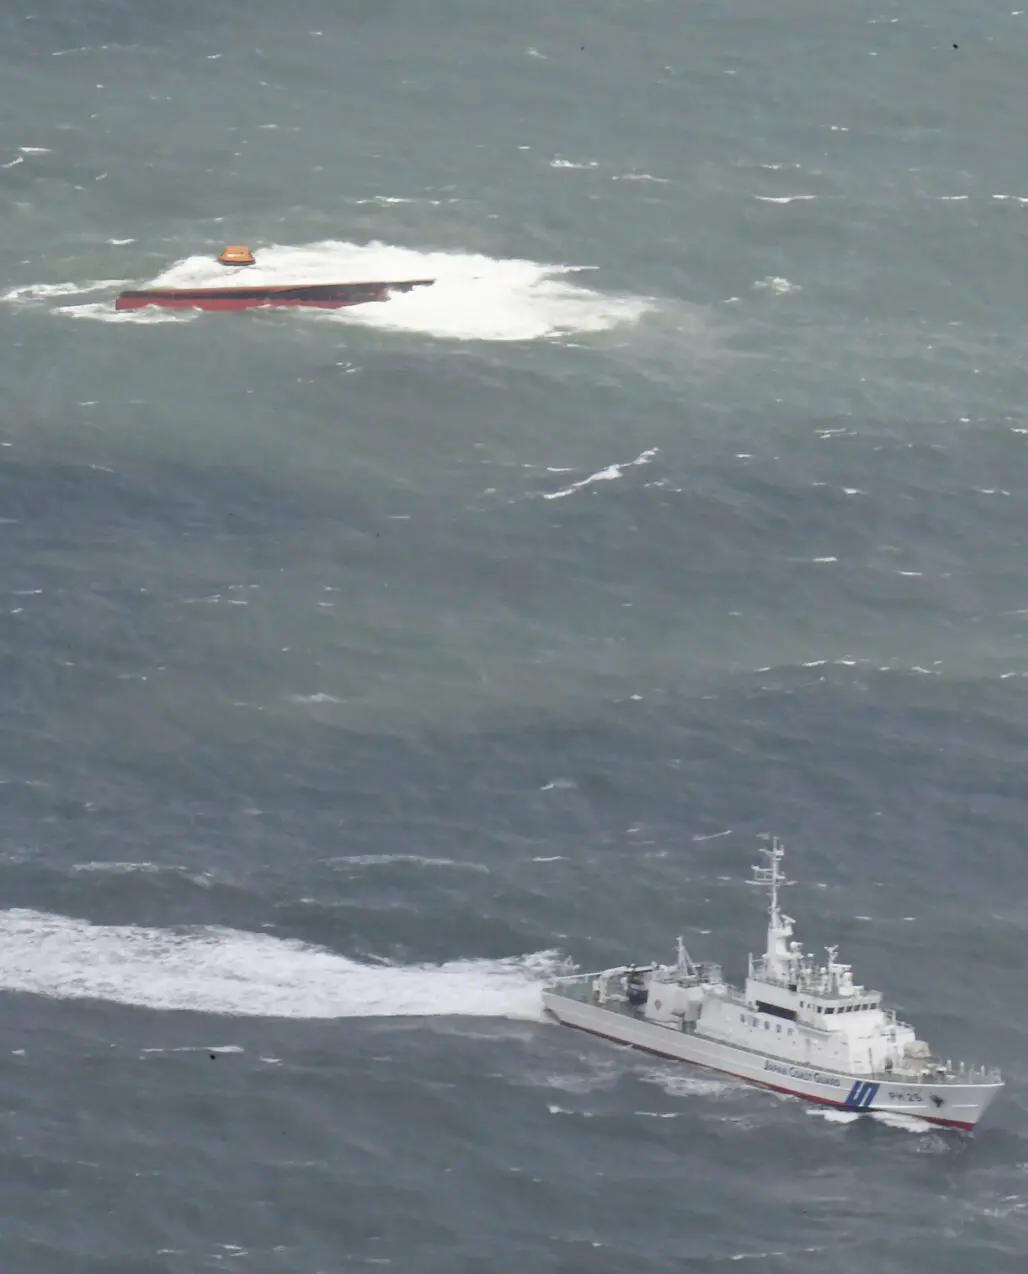 LA Post: South Korean tanker capsizes off southwestern Japan, 4 crewmembers rescued and 7 missing